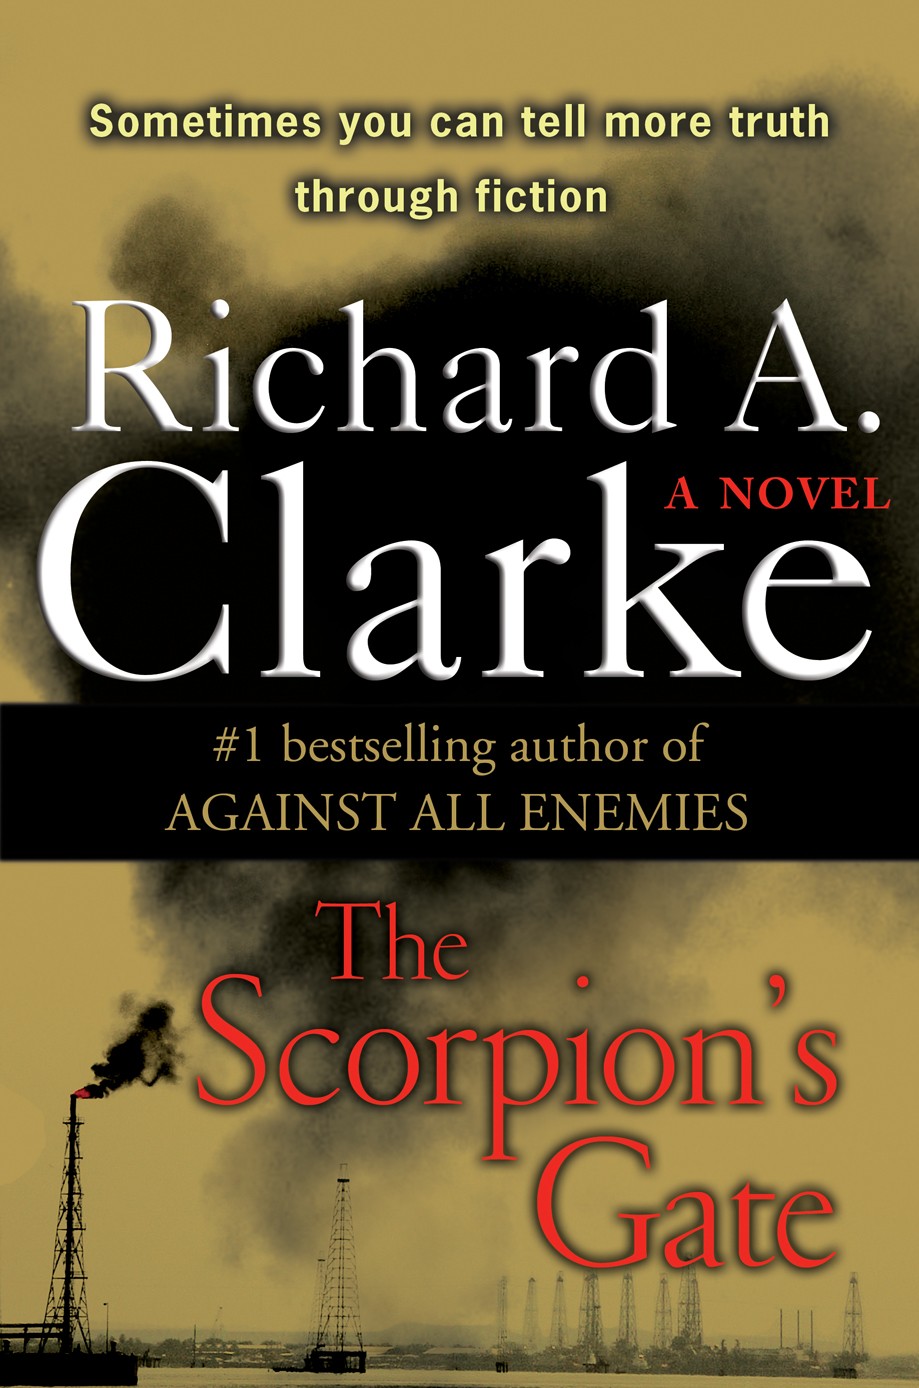 The Scorpion's Gate by Richard A. Clarke